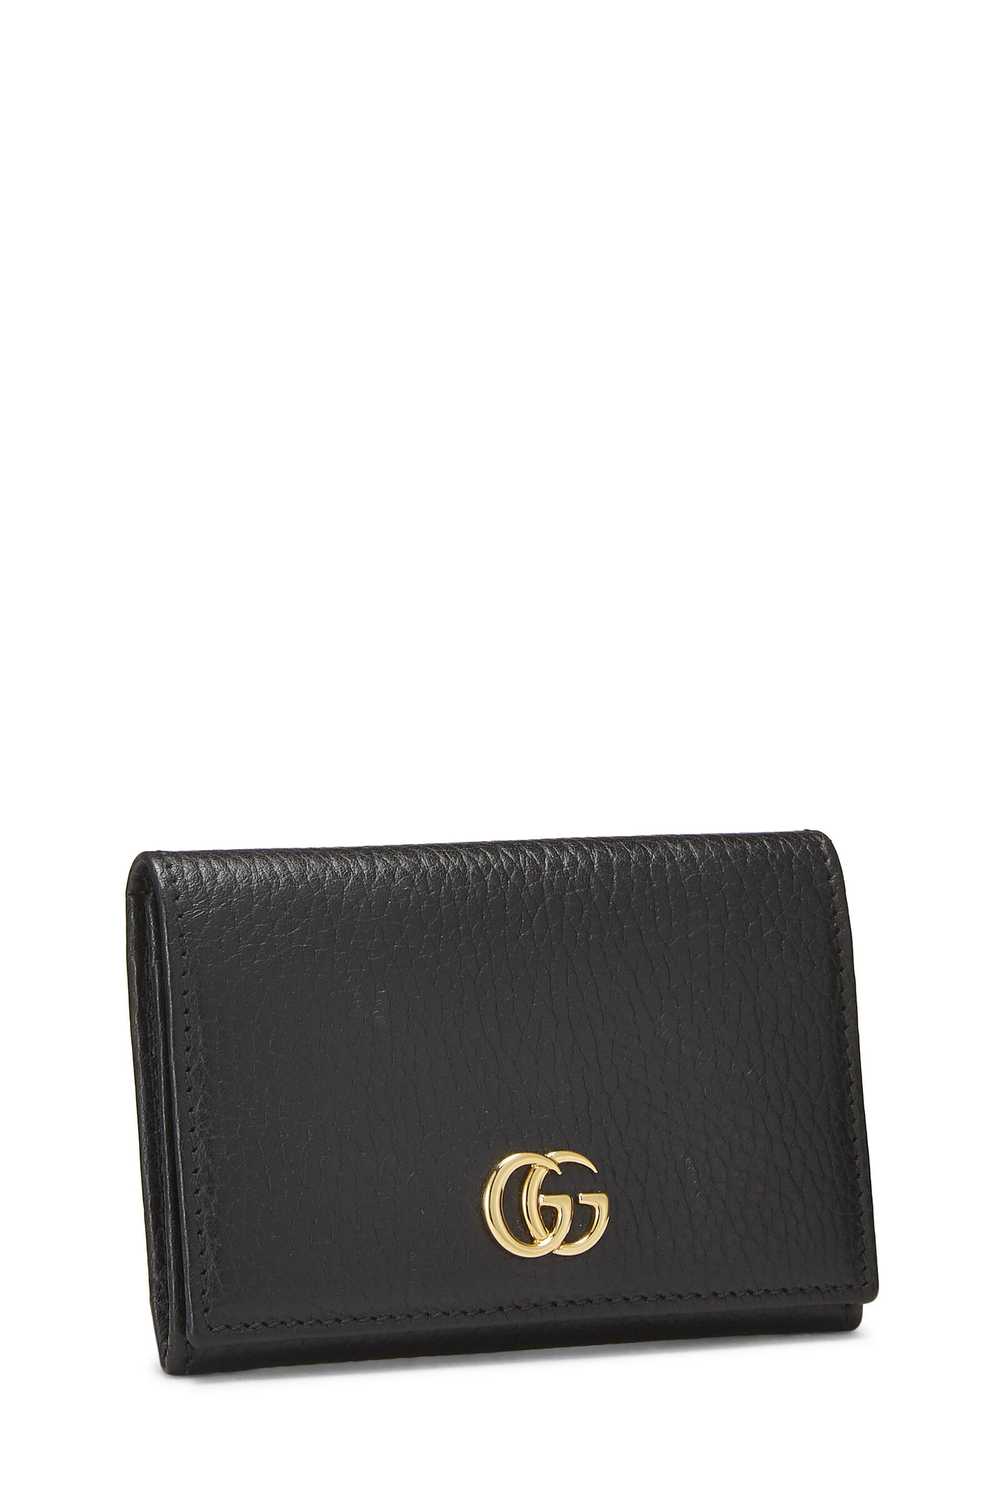 Black Leather GG Marmont Card Holder - image 2